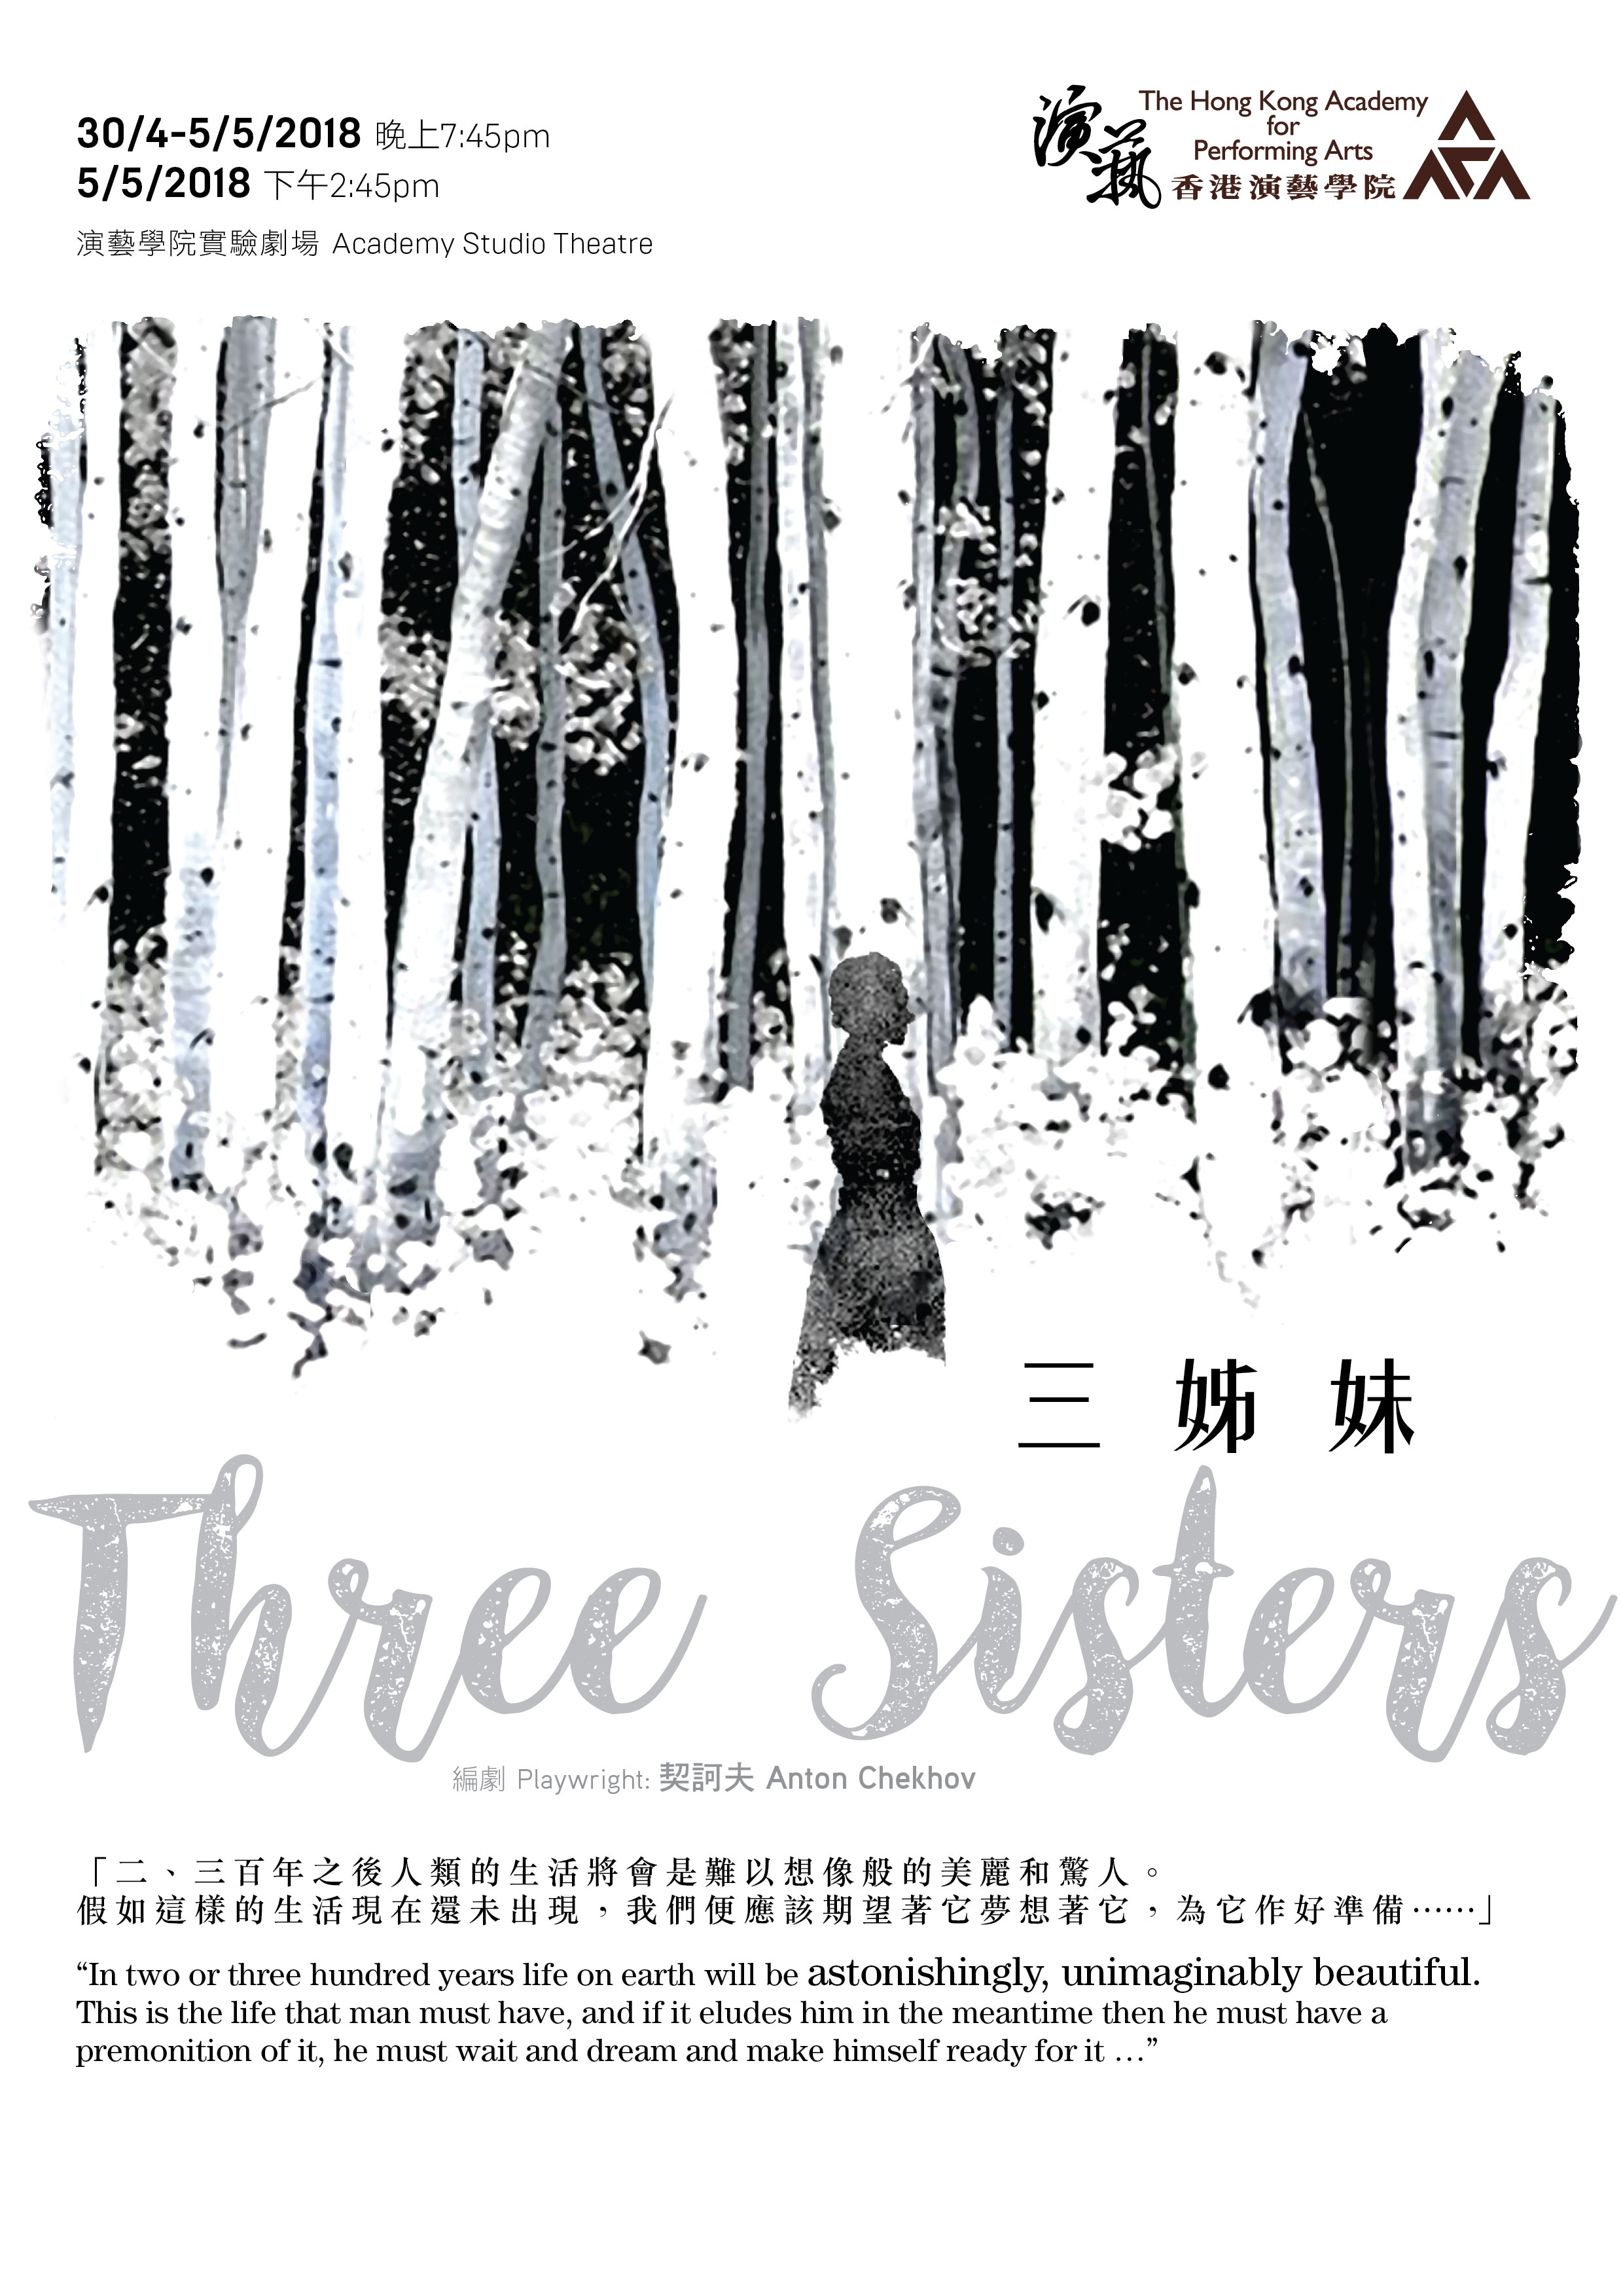 three sisters